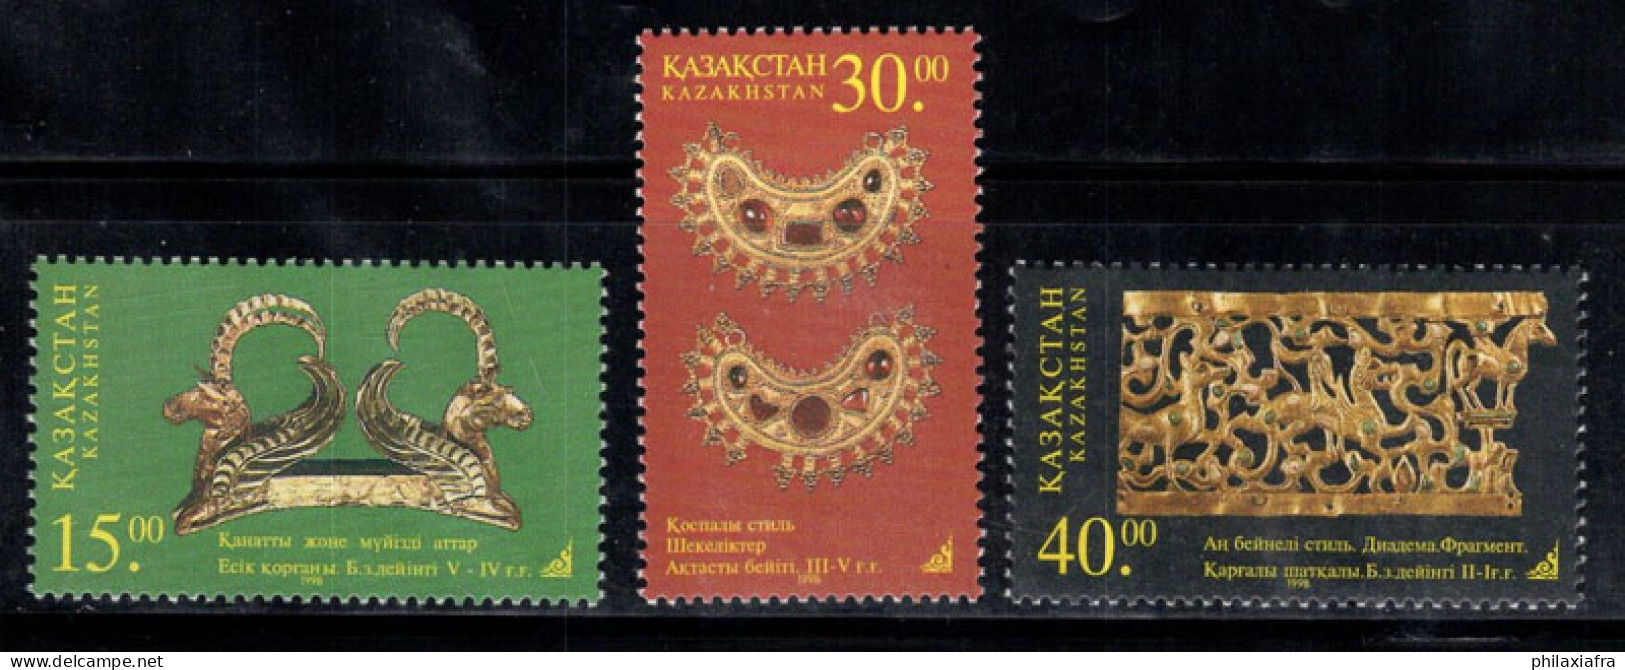 Kazakhstan 1998 Mi. 210-212 Neuf ** 100% Art, Or - Kasachstan